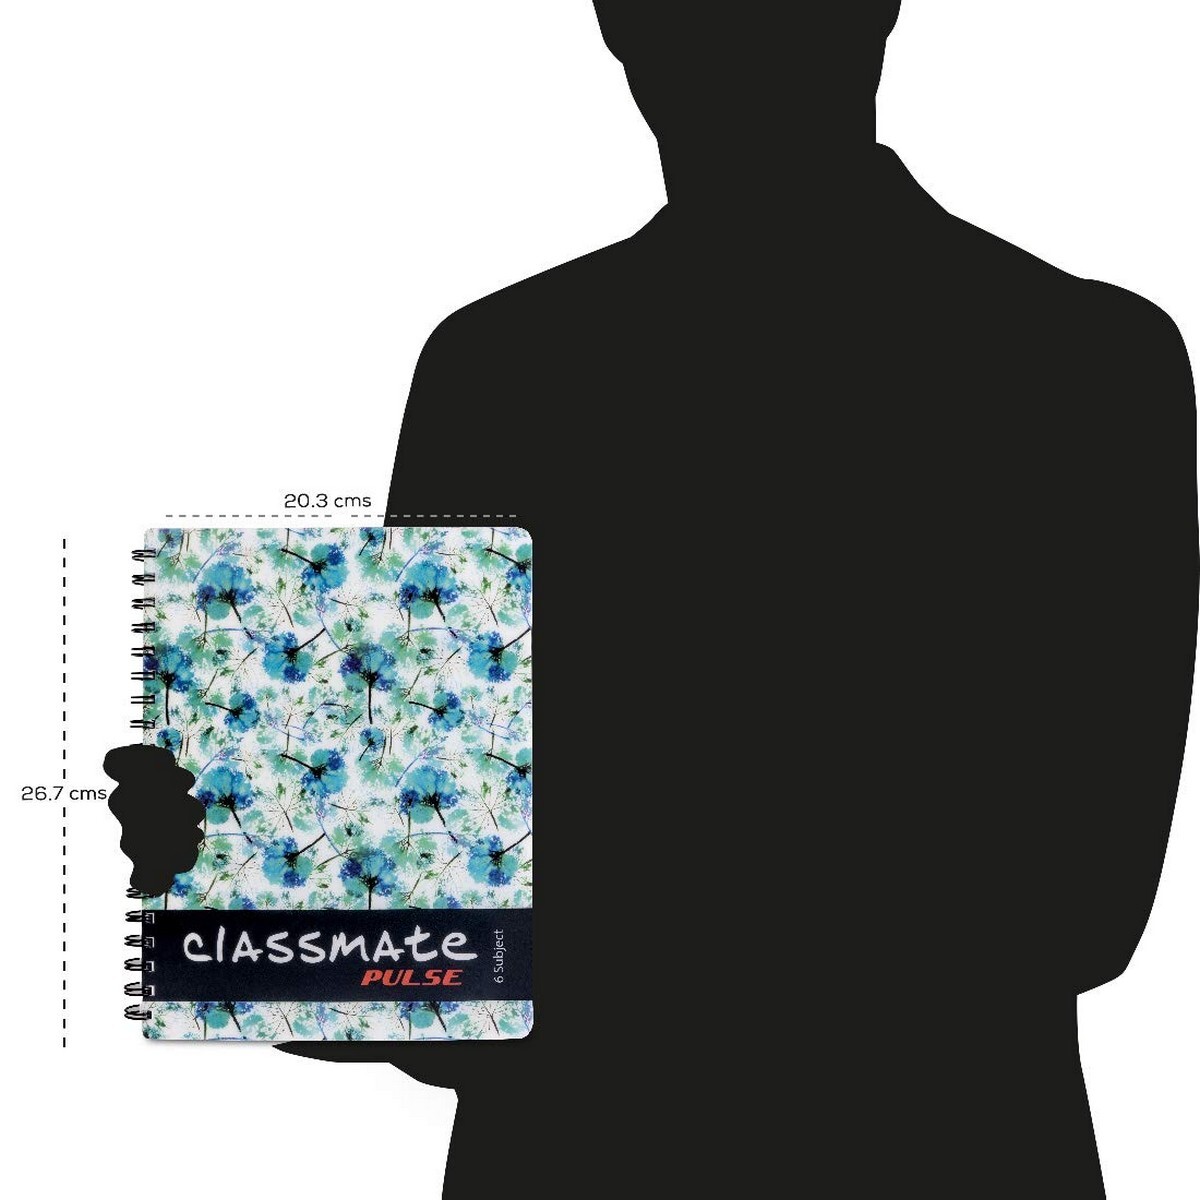 Classmate 6 Subject Notebook Single Line 302p-2100117 Assorted Colour & Design